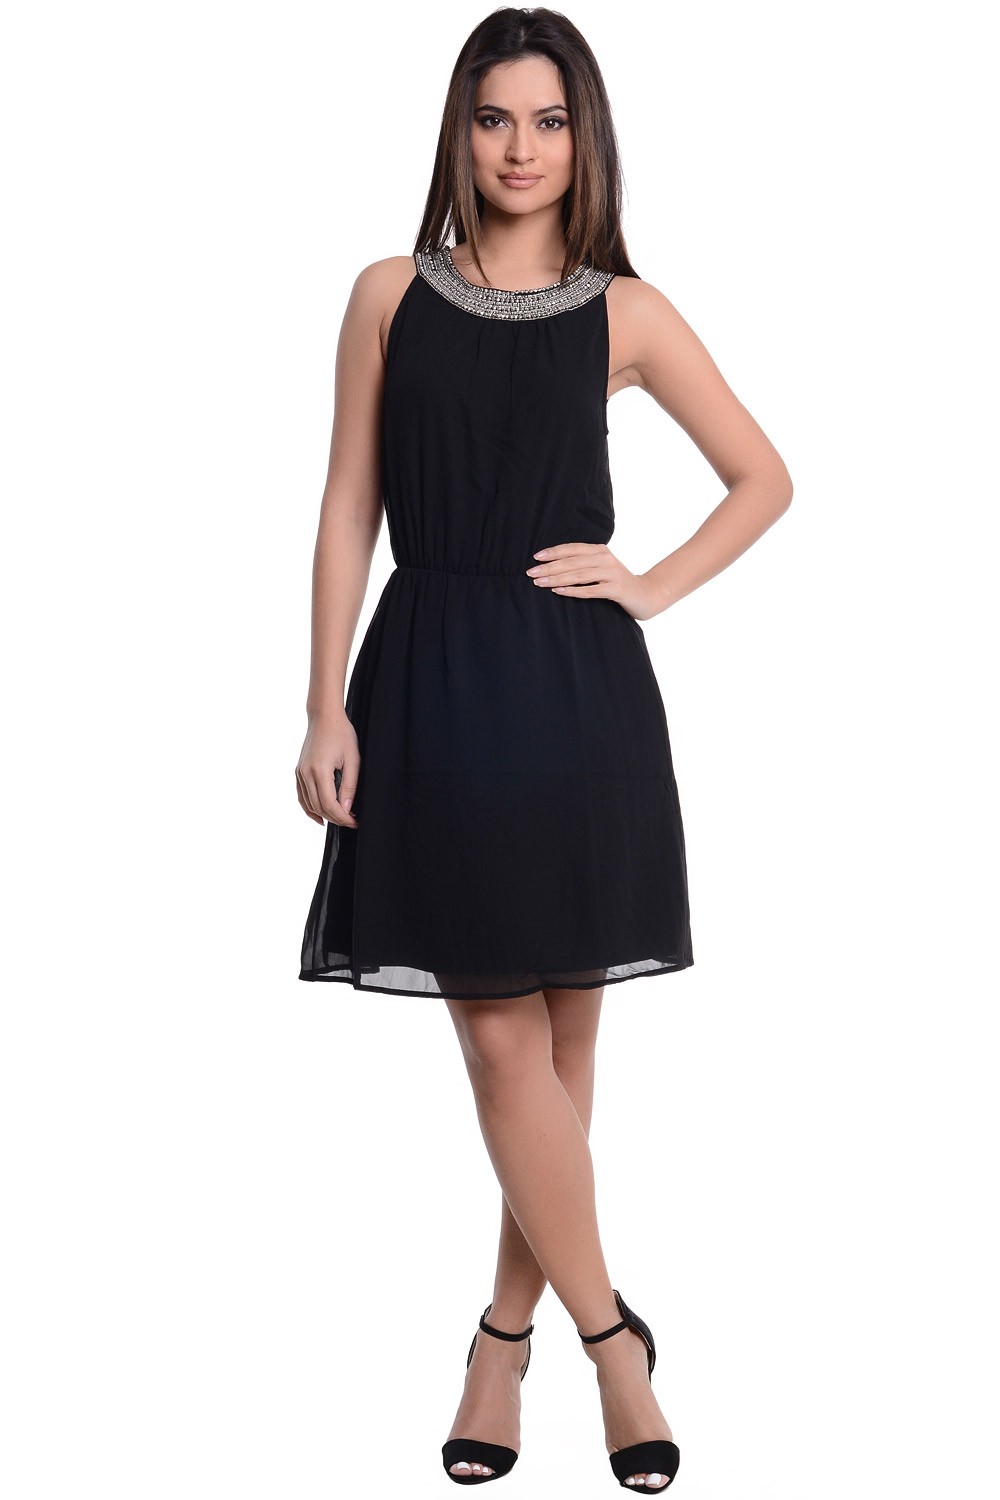 Only Novita Embellished Chiffon Dress in Black | iCLOTHING